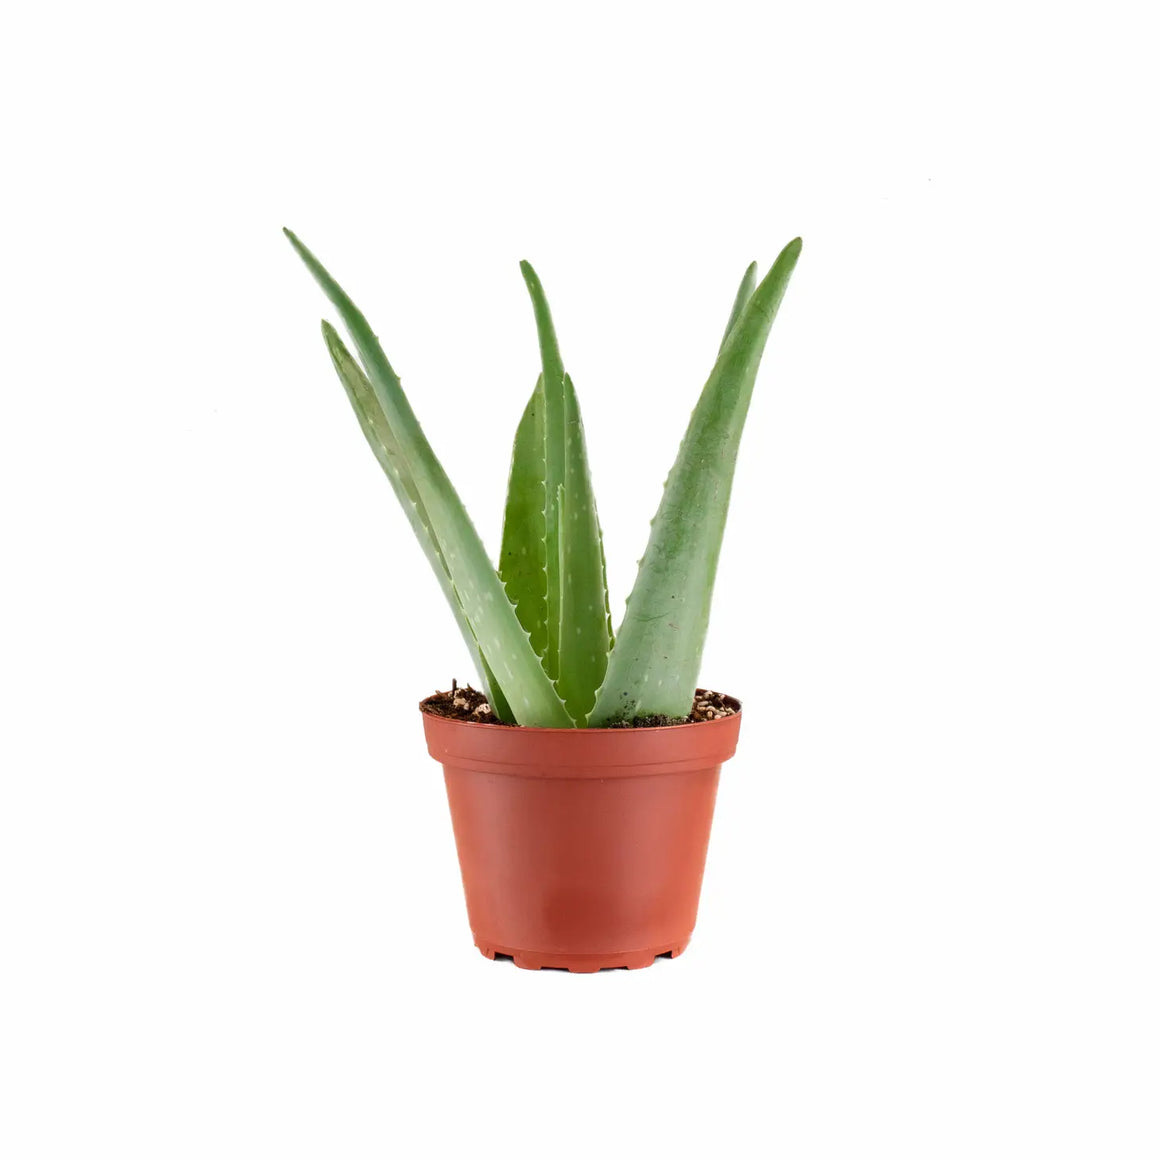 Aloe Vera House Plant in 4" Grow Pot